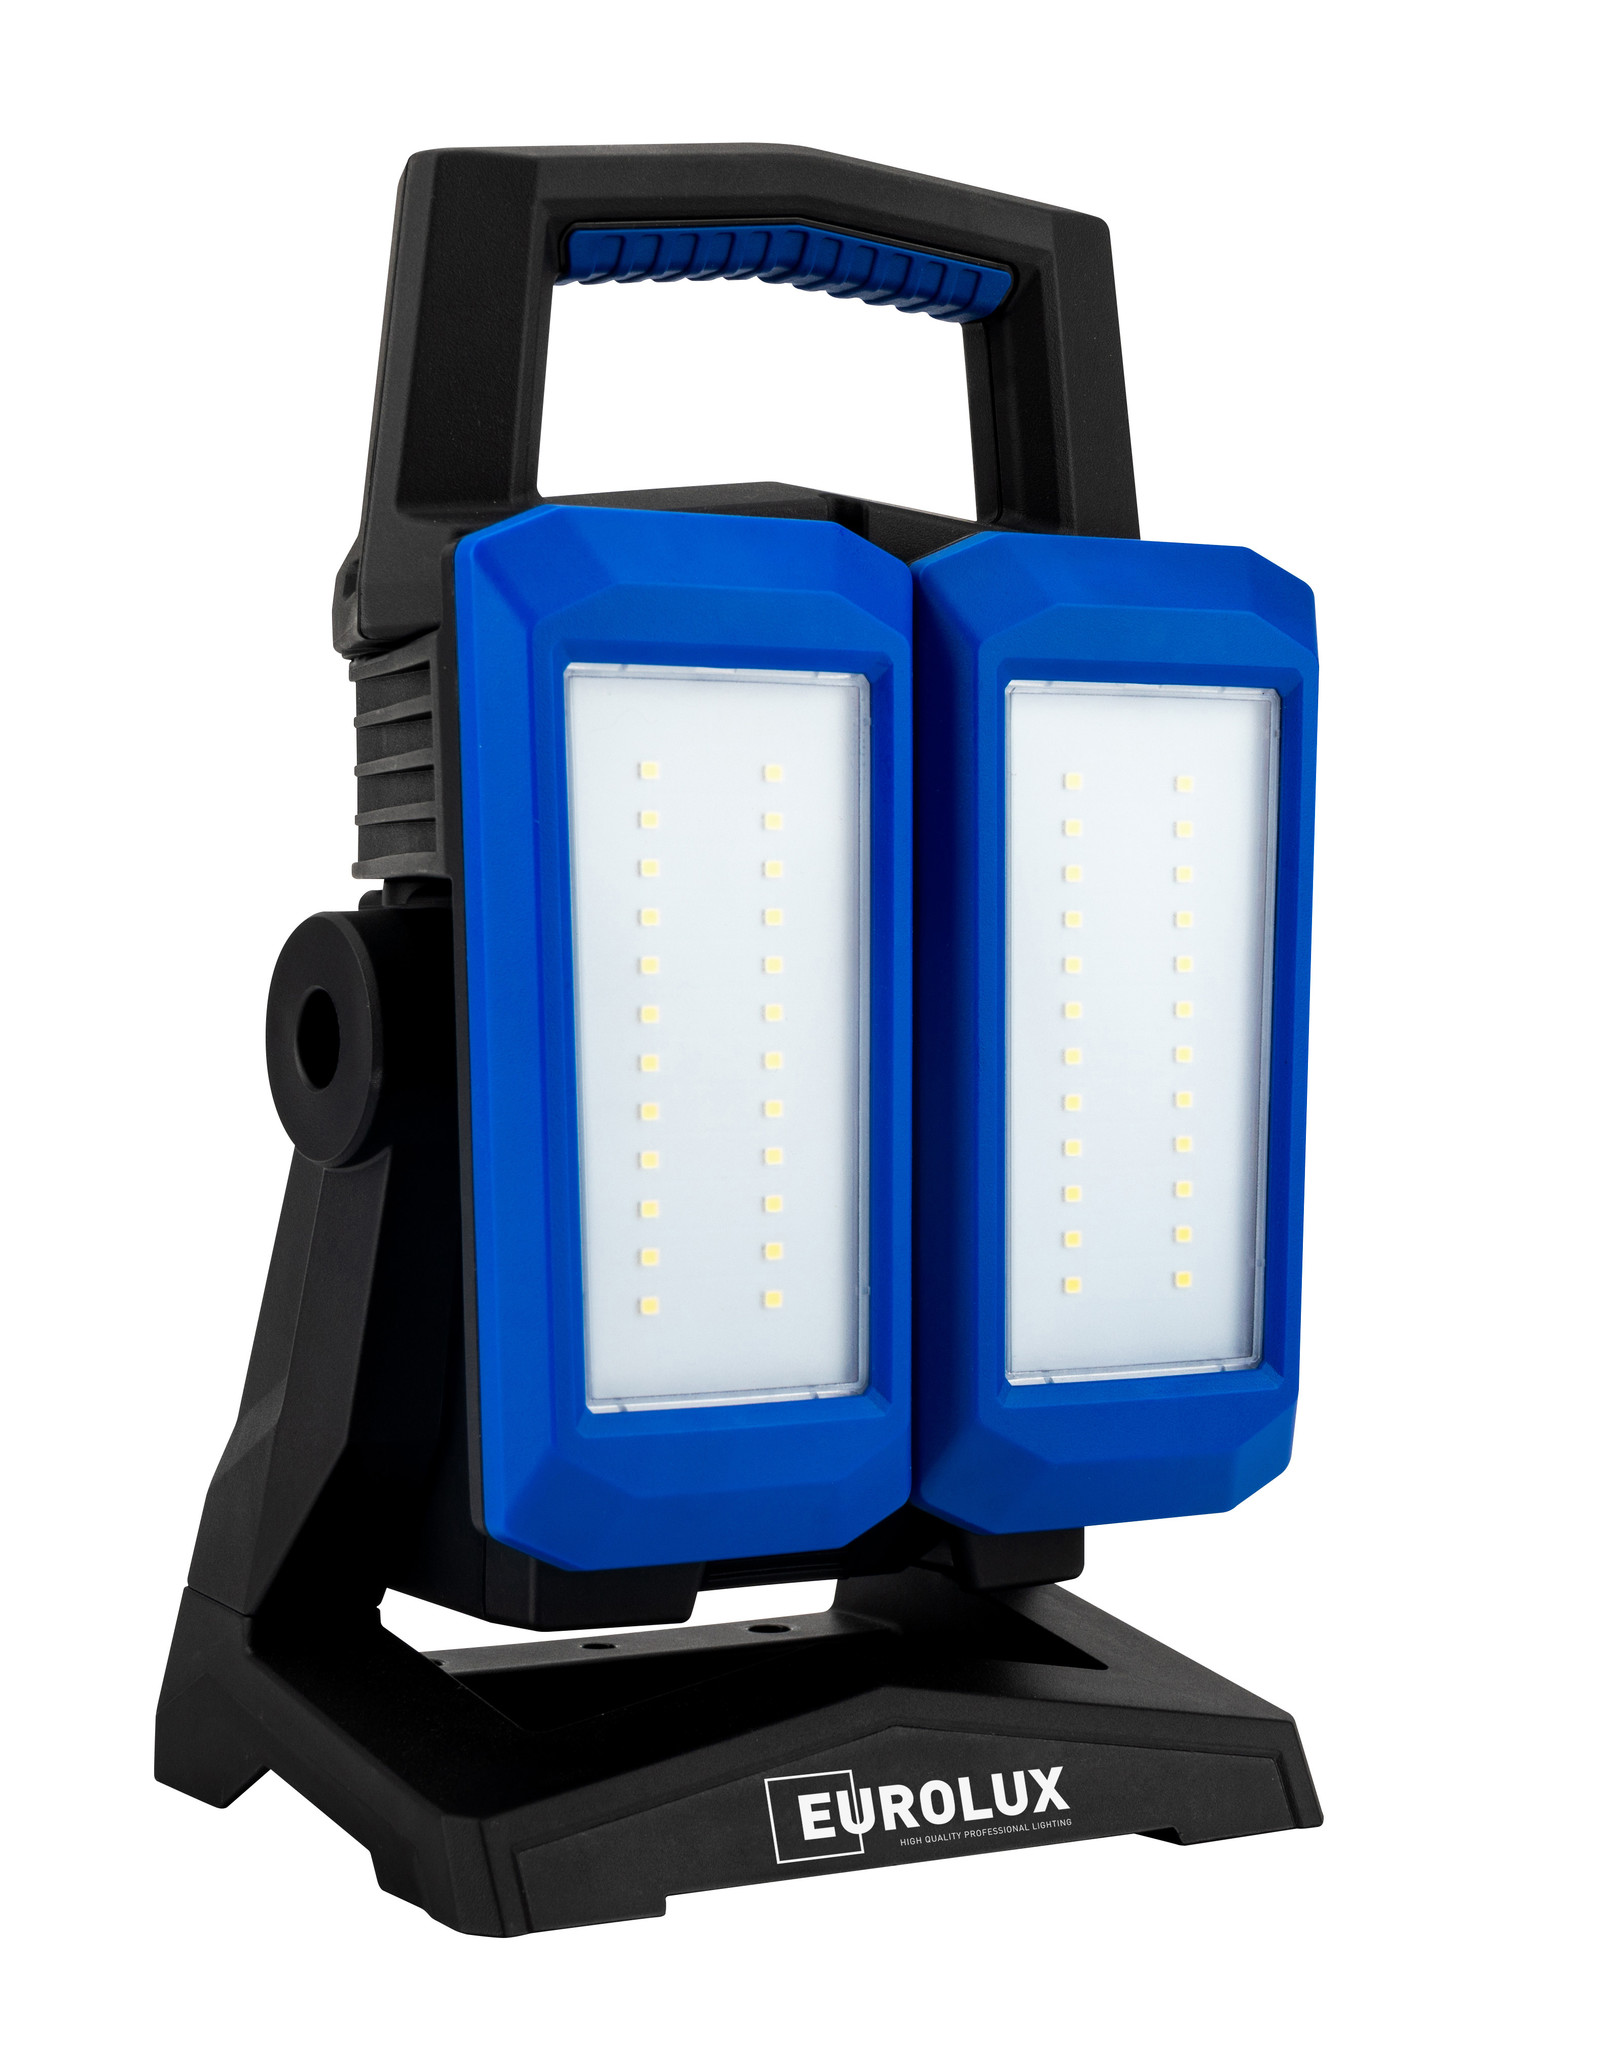 Genre Leven van weer Eurolux Twin-Spot 4500 LED accu bouwlamp - 45W - 5700K - 4500 Lumen - -  Hevutools.nl